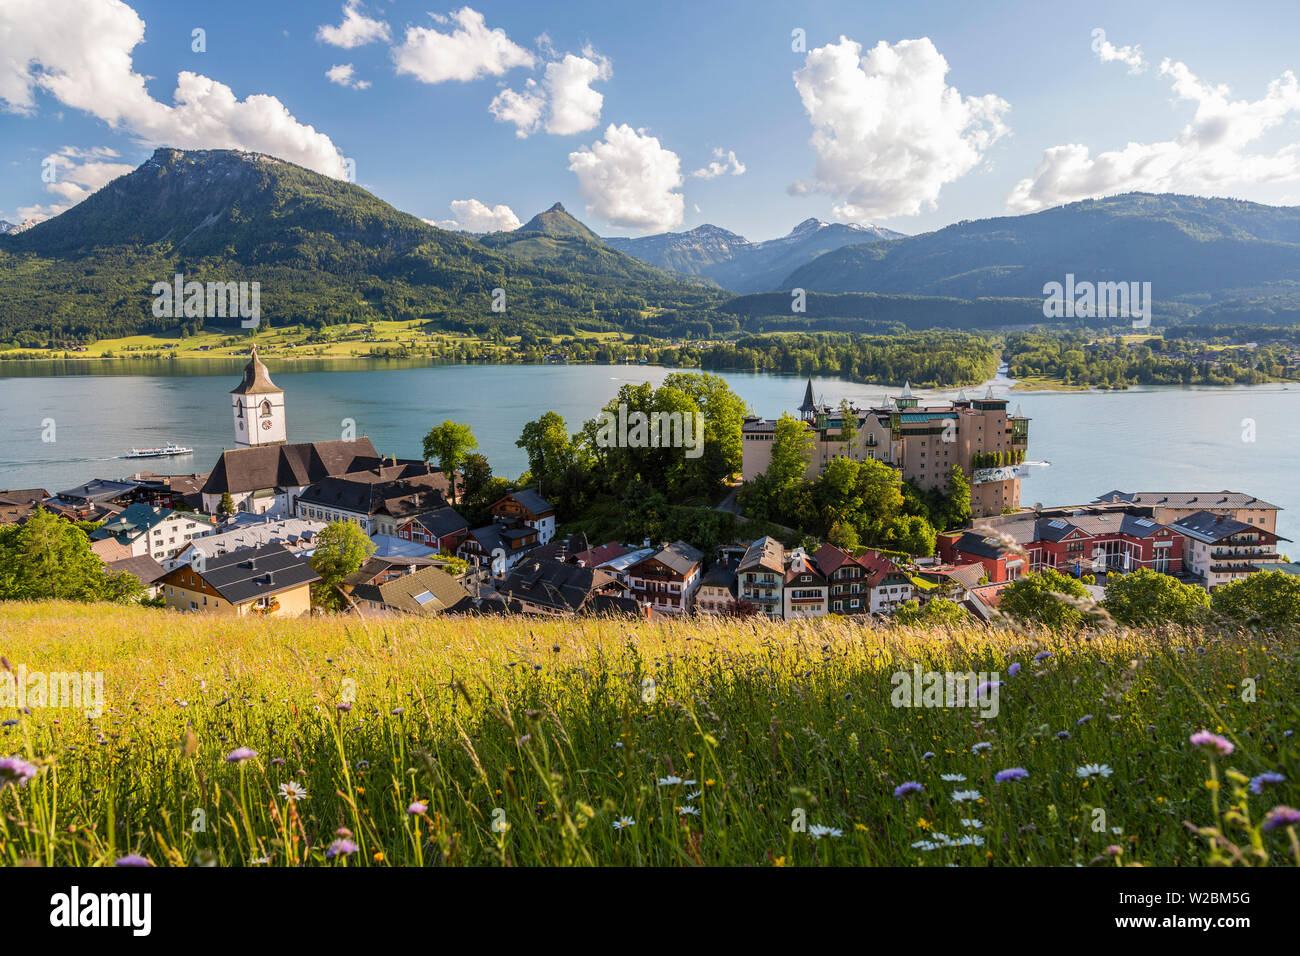 St. Wolfgang, Wolfgangsee lake, Flachgau, Upper Austria, Austria Stock Photo